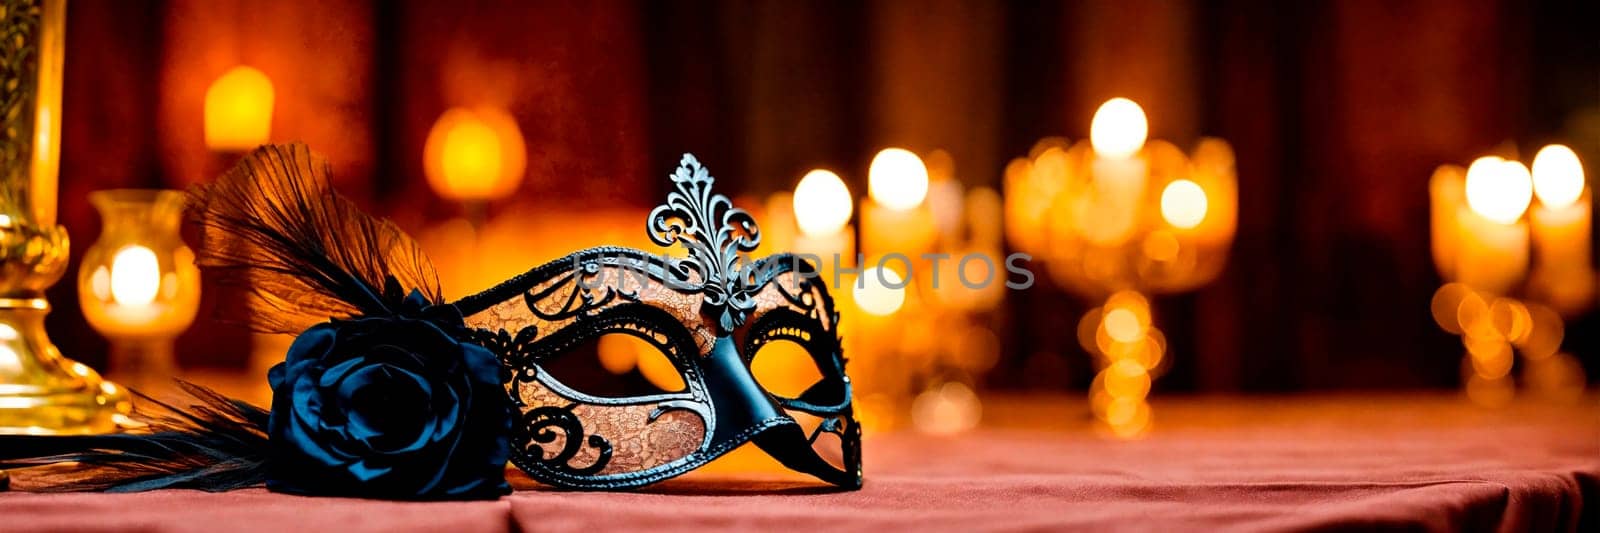 Black lace mask for masquerade. Selective focus. by yanadjana